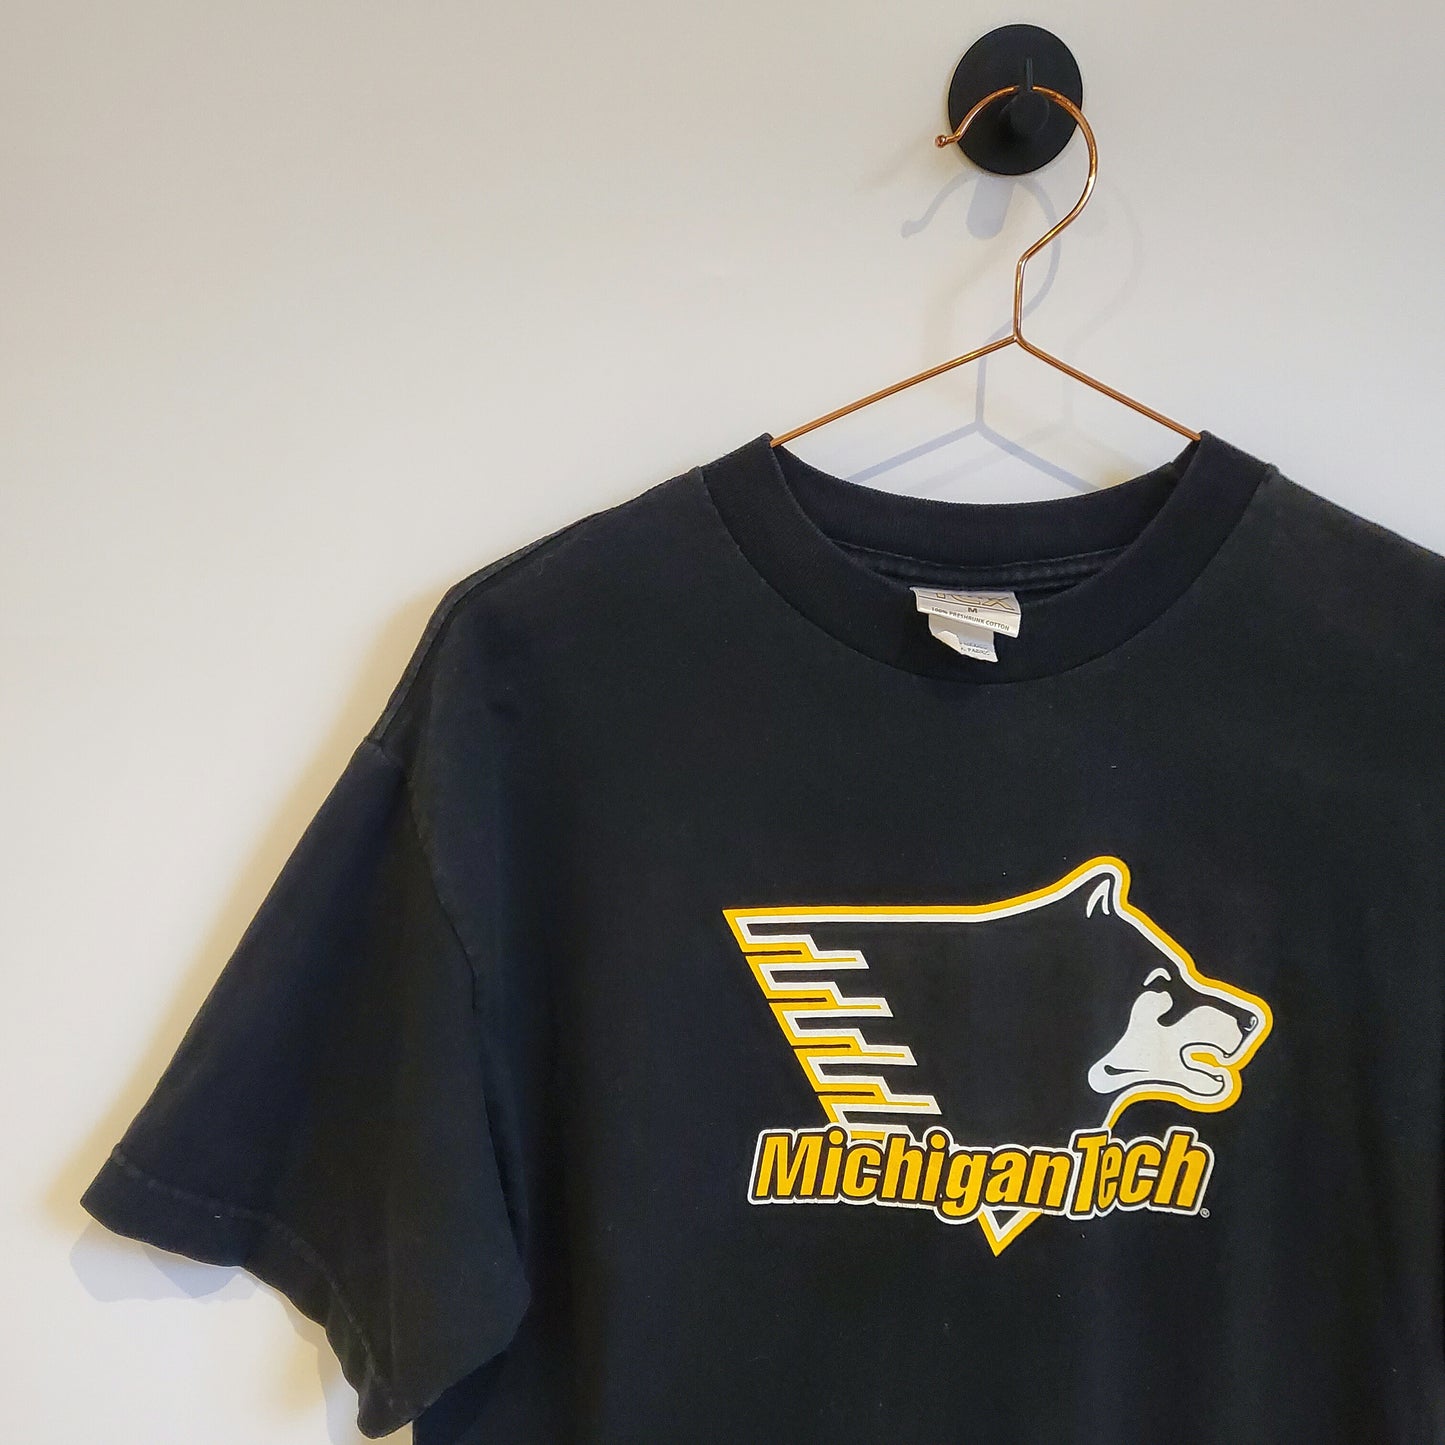 Michigan Graphic T-shirt | Size M